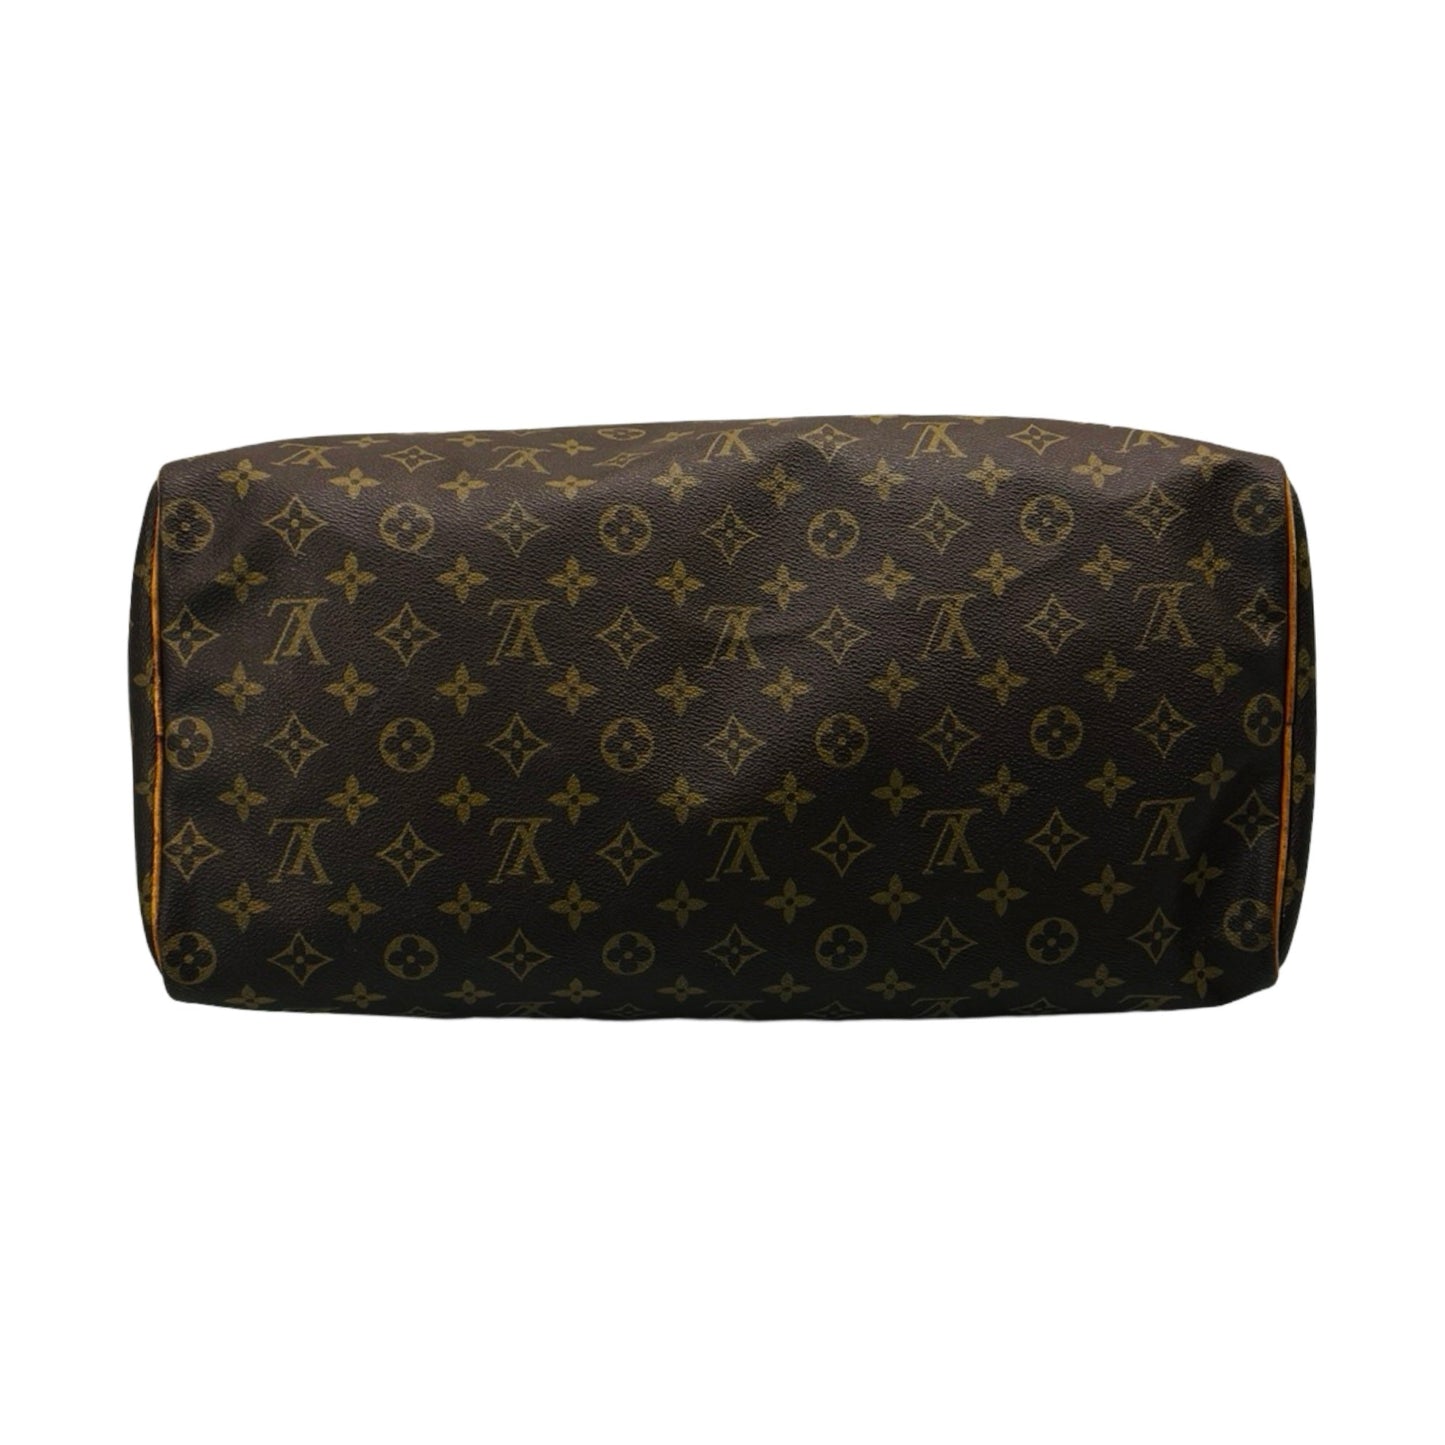 Speedy 40 Monogram Brown Handbag Luxury Designer Louis Vuitton, Size Large